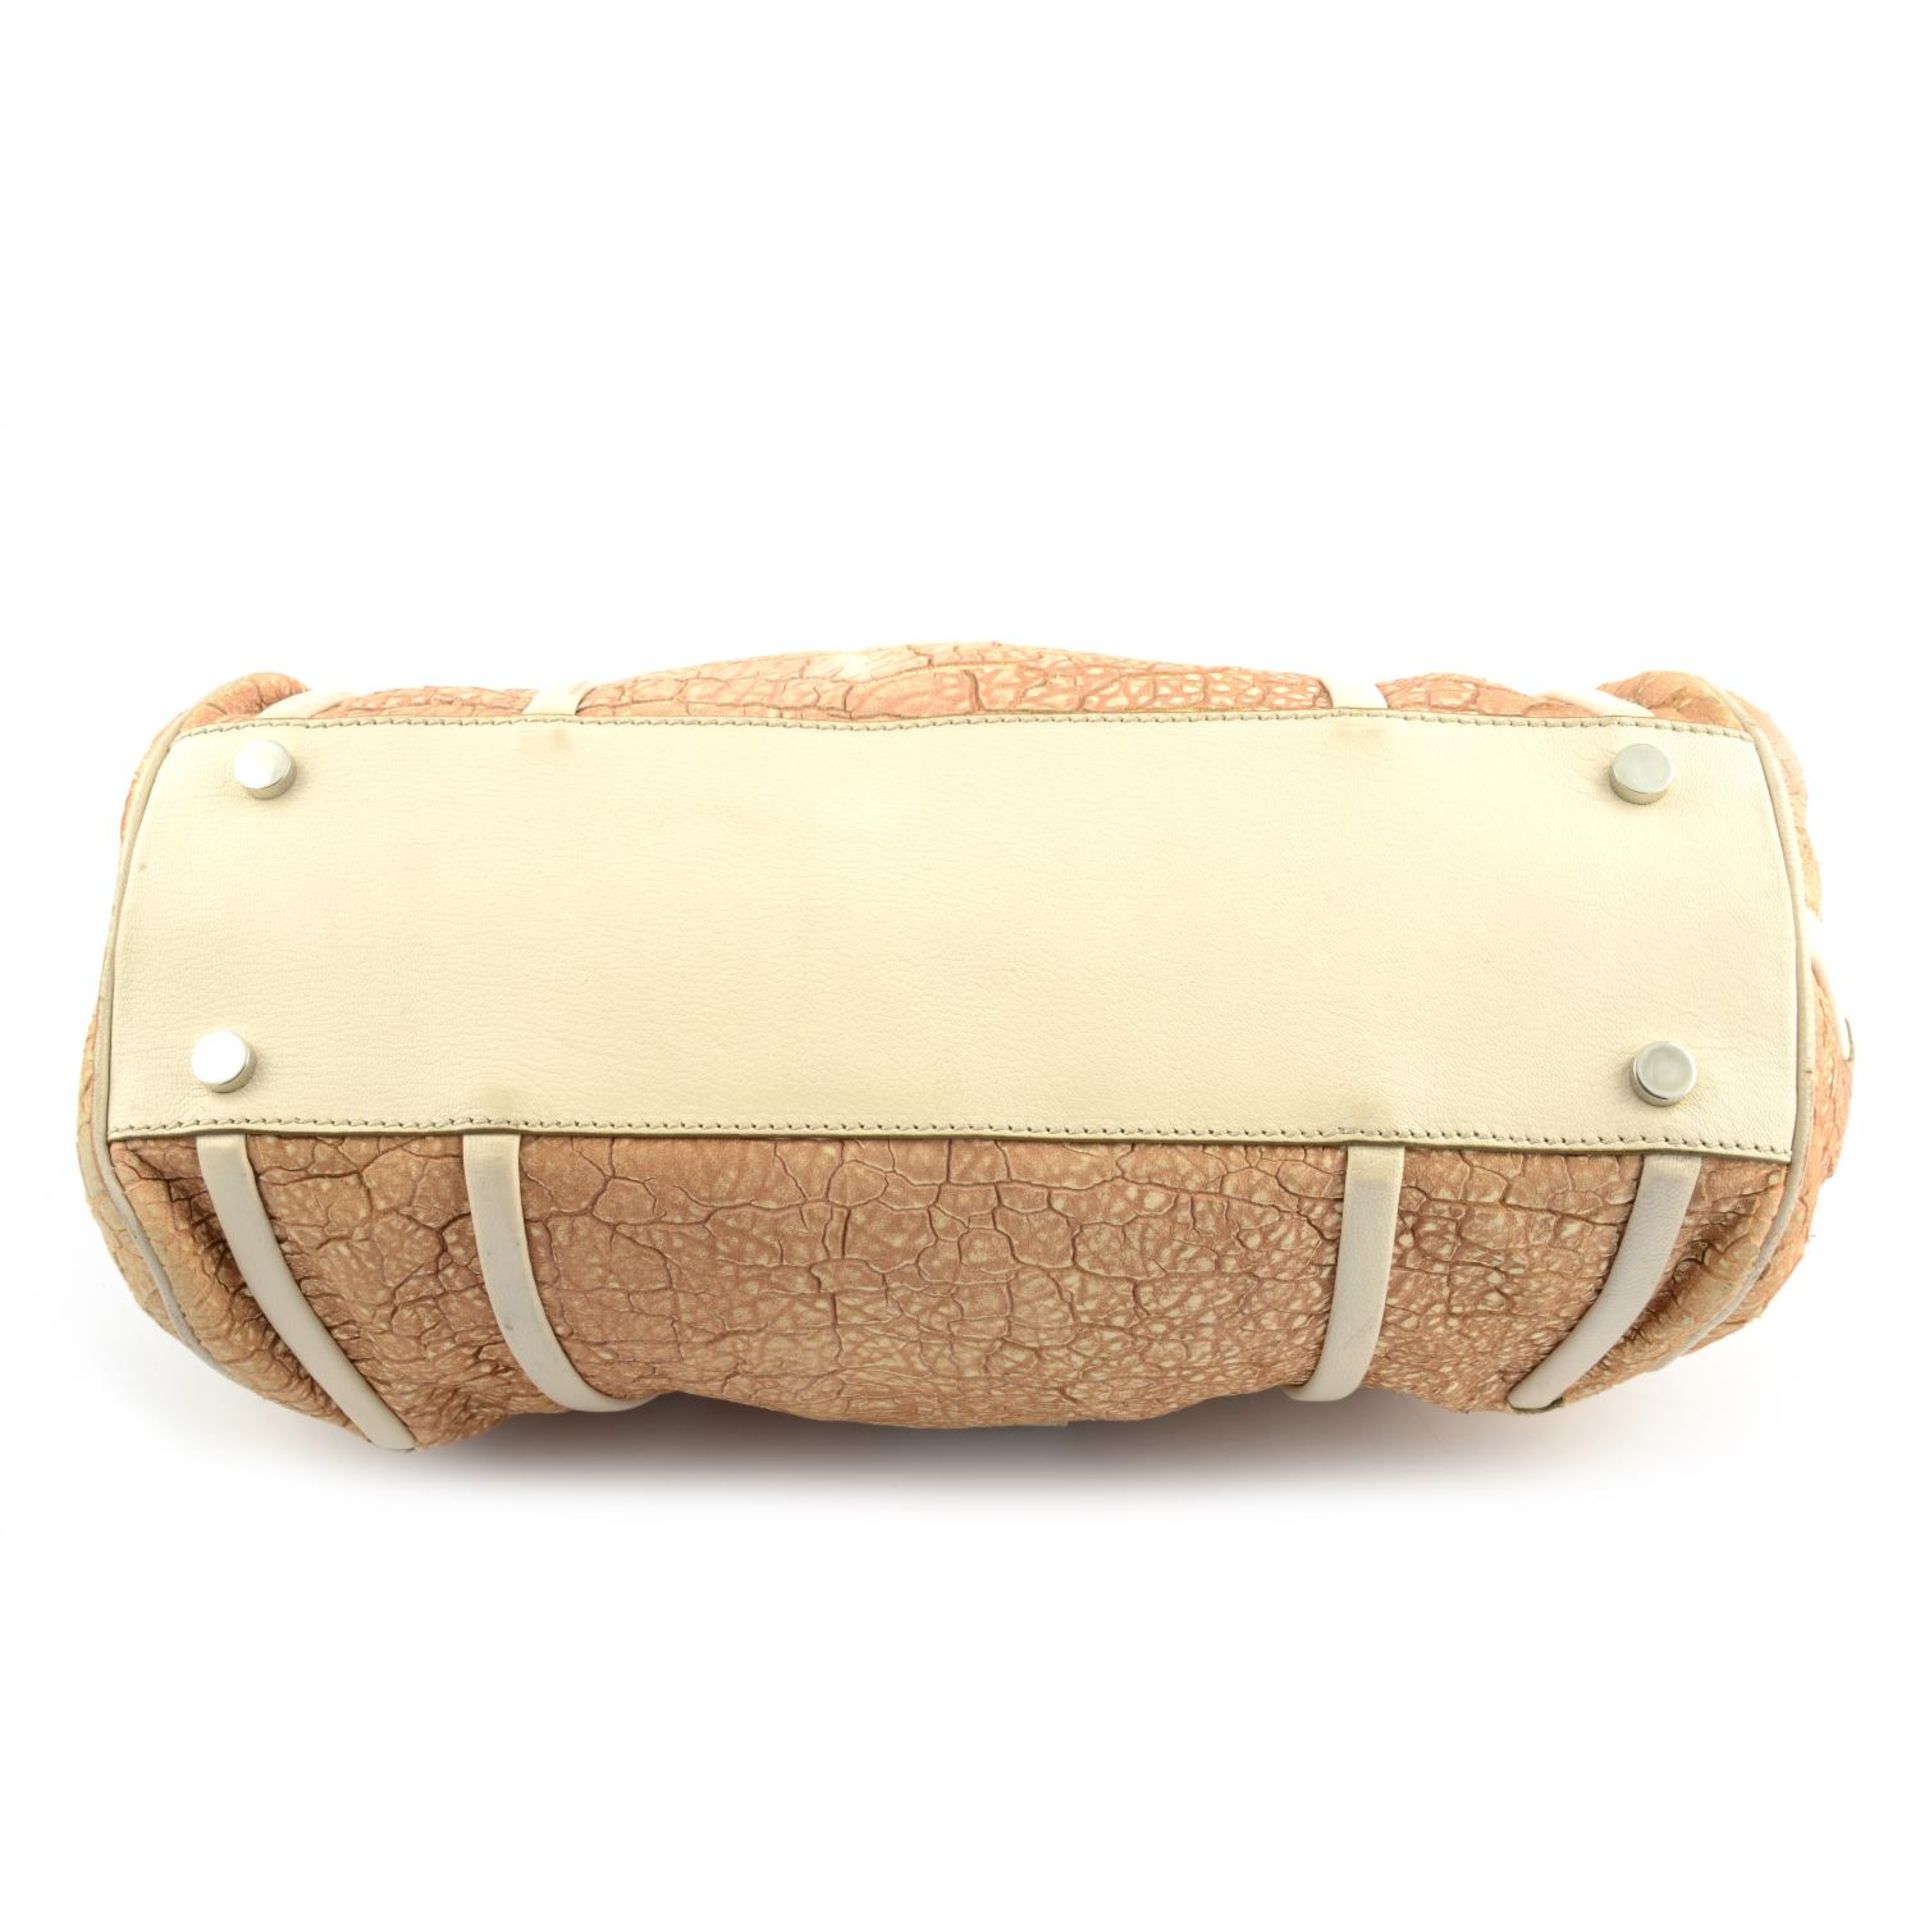 CÉLINE - a textured leather handbag. - Bild 4 aus 9